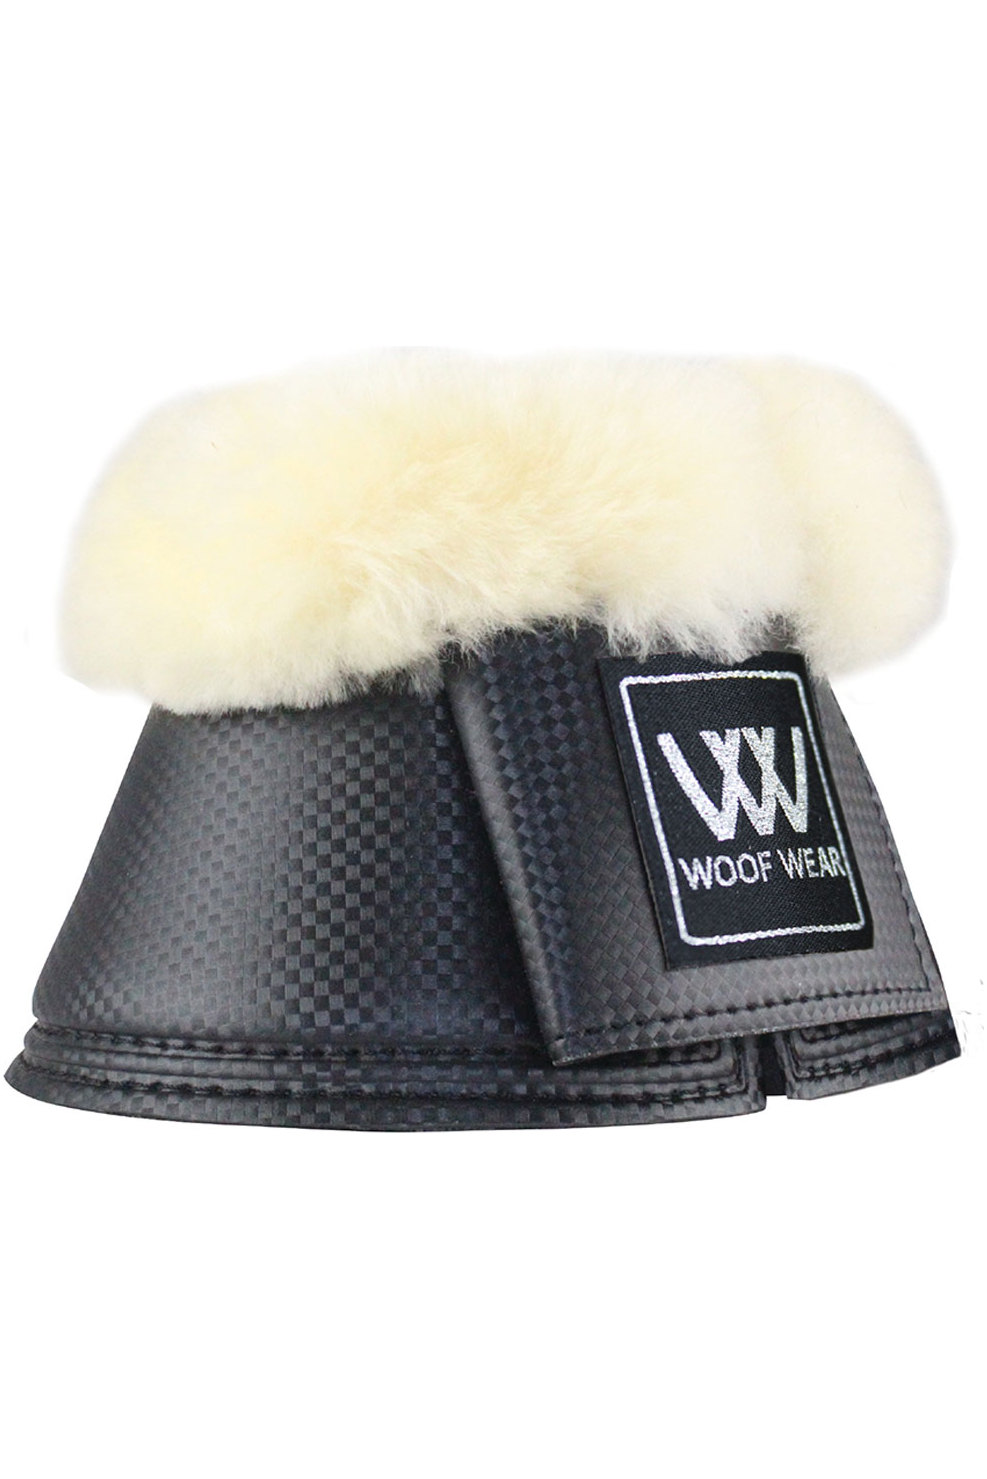 Woof Wear Pro Overeach Boot 